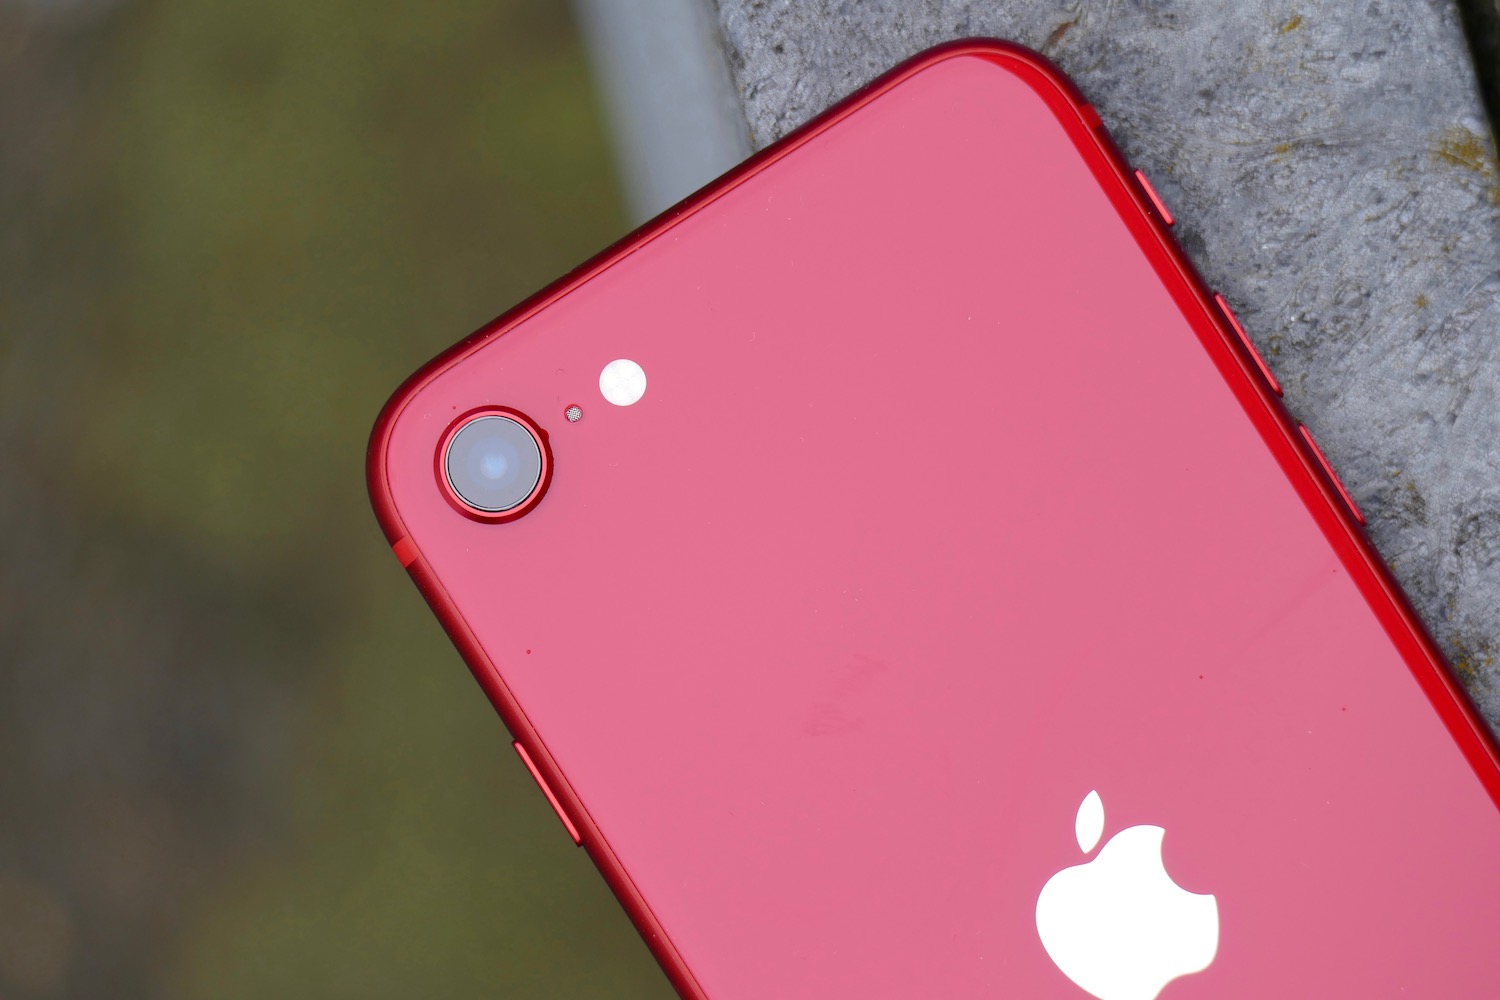 iPhone SE 2020 Review: Apple's $399 iPhone brings unprecedented value